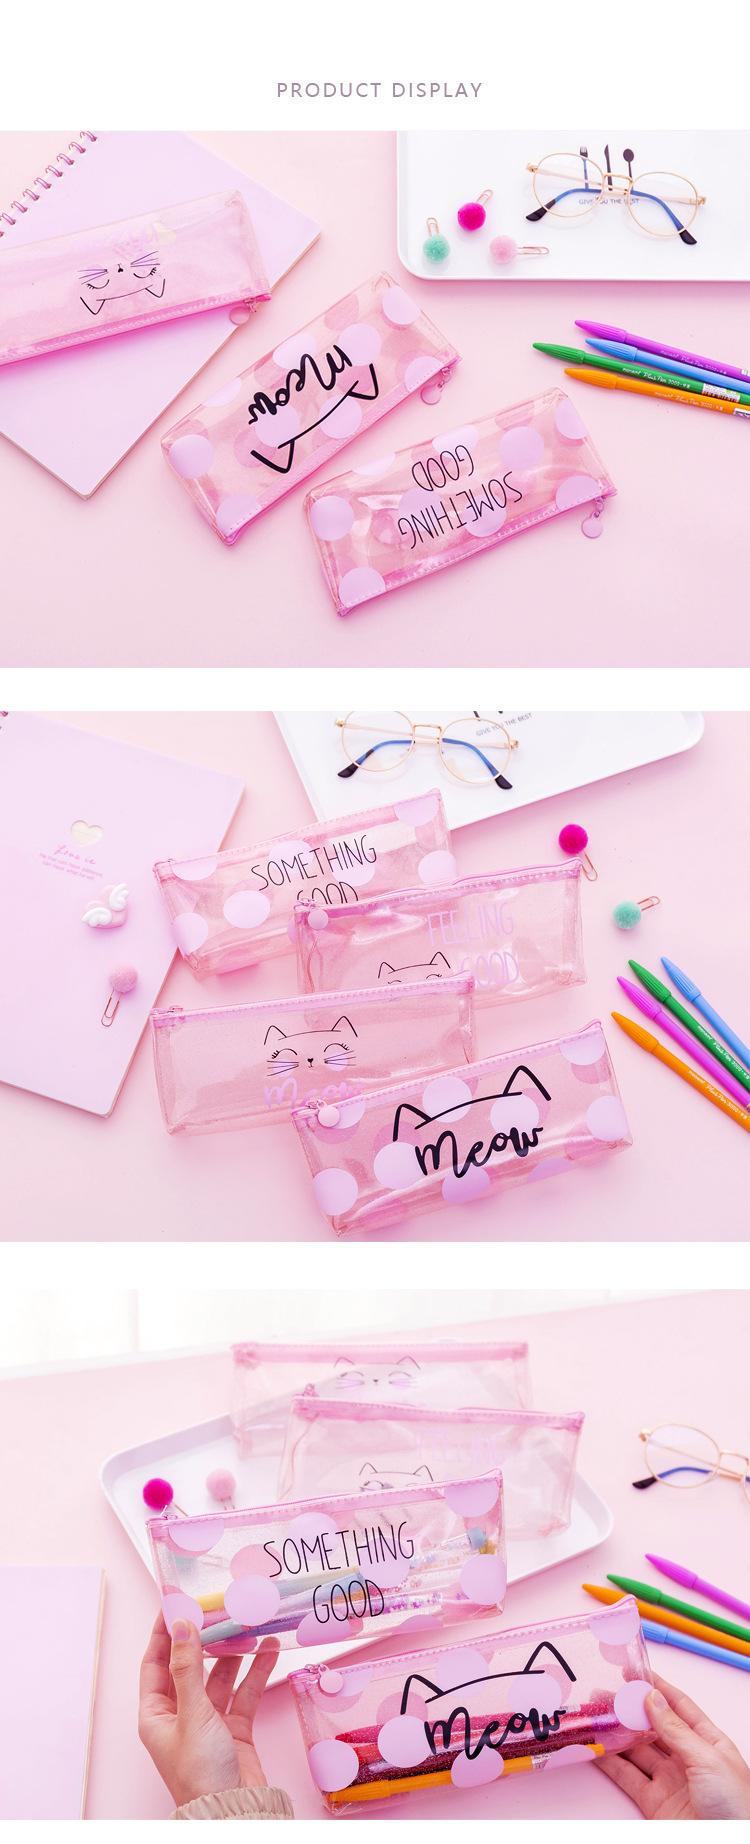 Cute Kawaii pink cat Pencil Case School Supplies for girls Stationery Gift large Pencil bag Transparent pen Bag School Tools